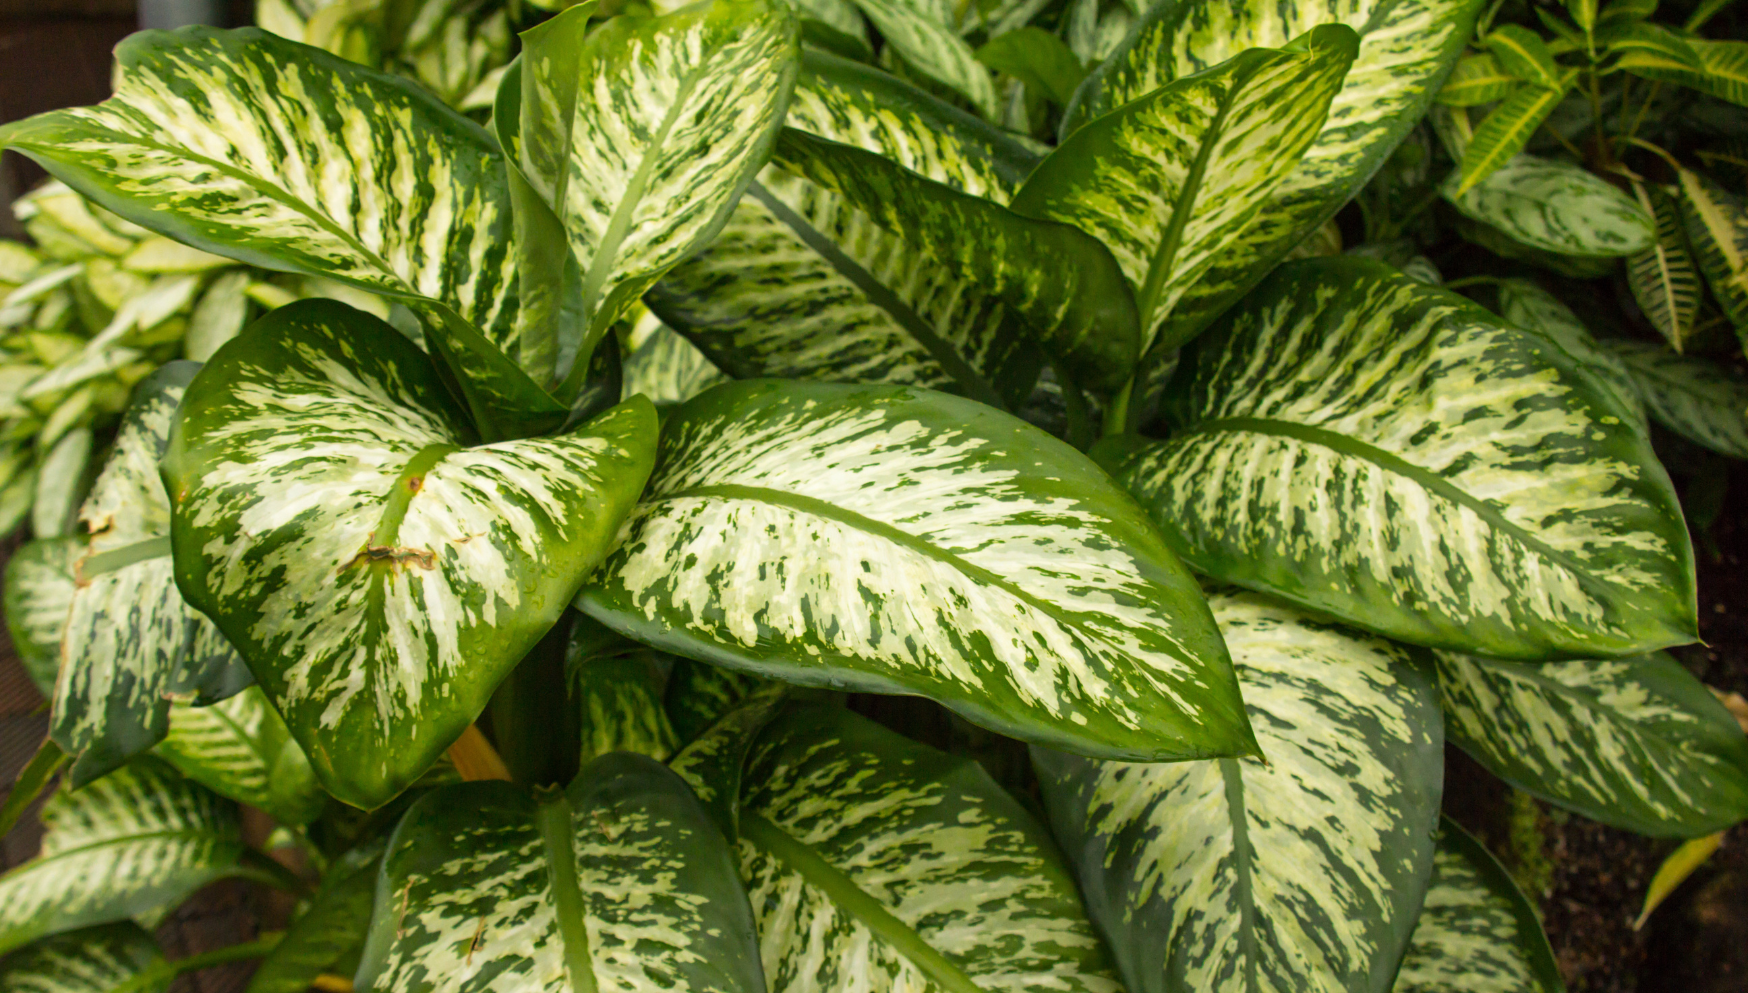 Dieffenbachia leaves